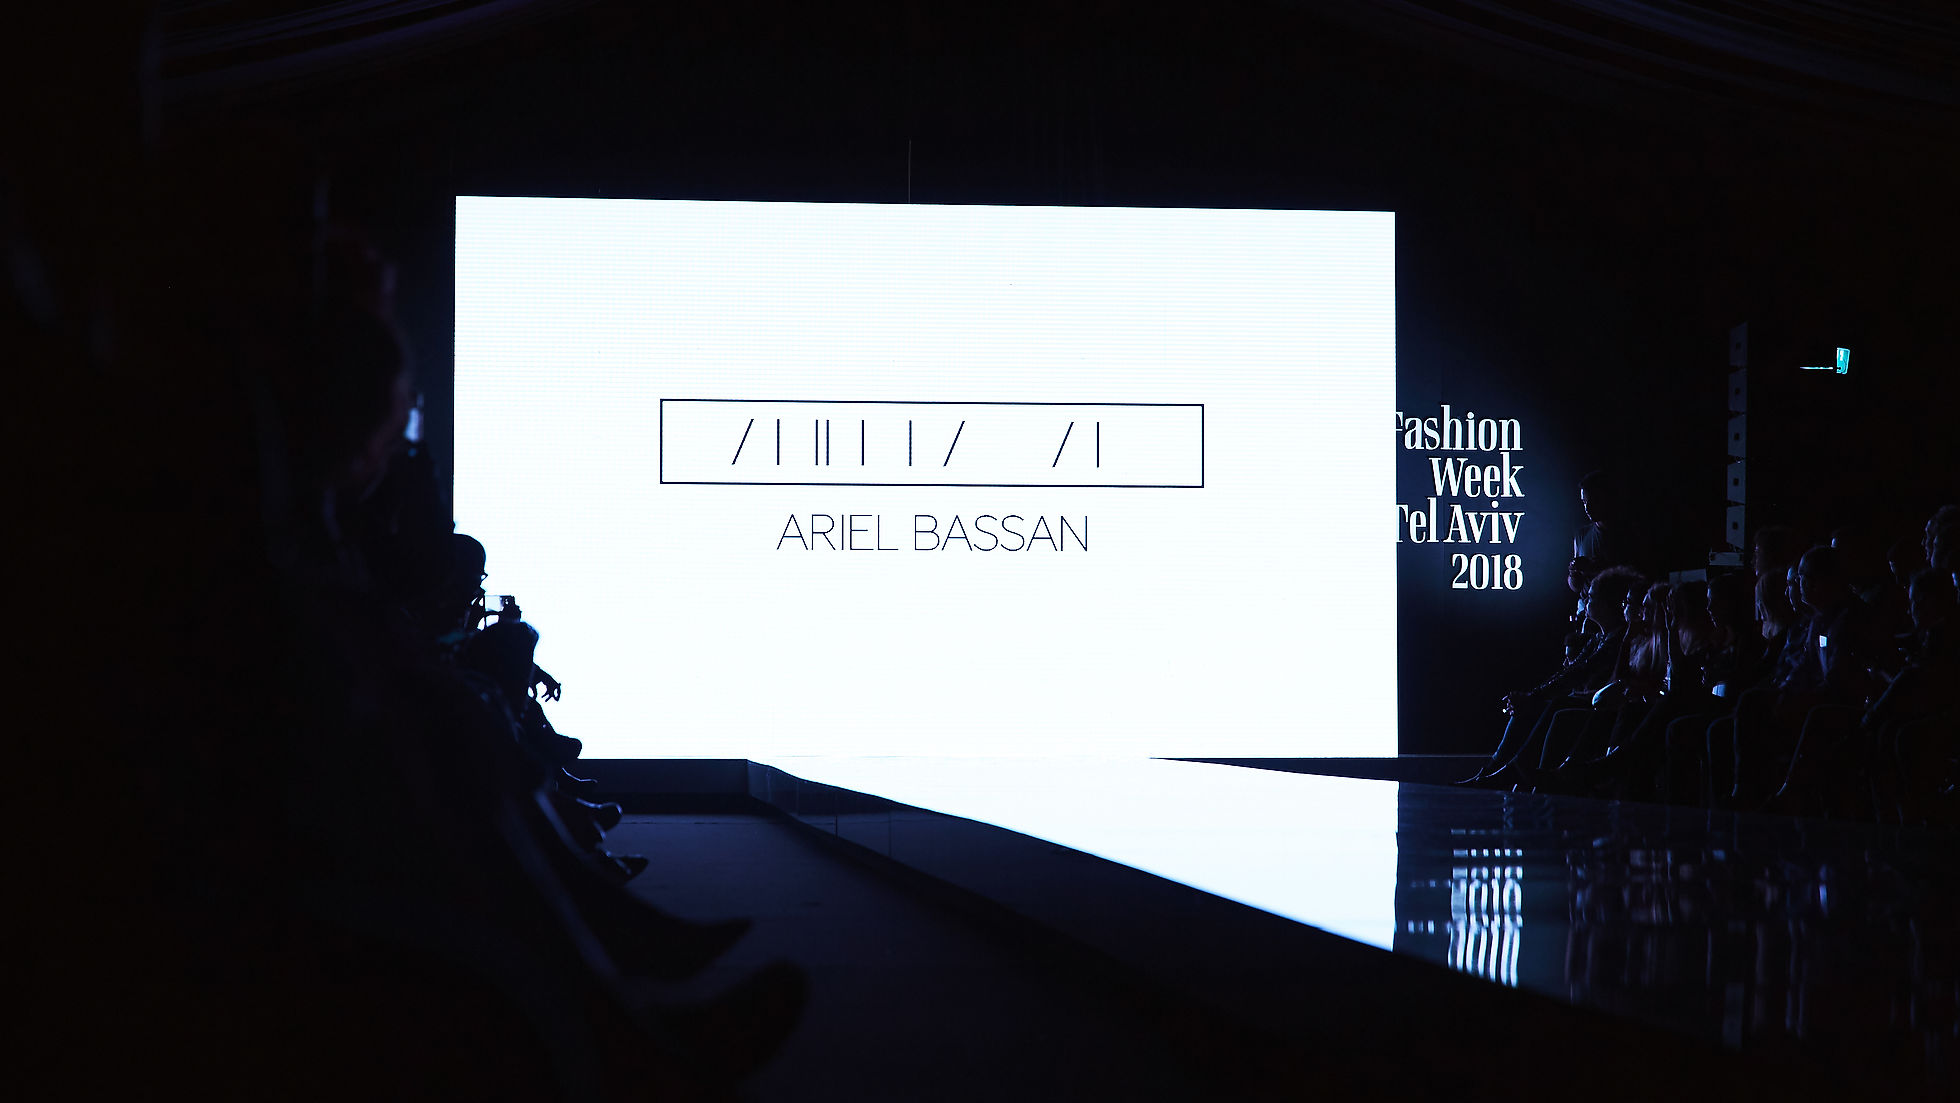 ARIEL BASSAN AW18/19 RUNWAY at Tel Aviv FASHION WEEK